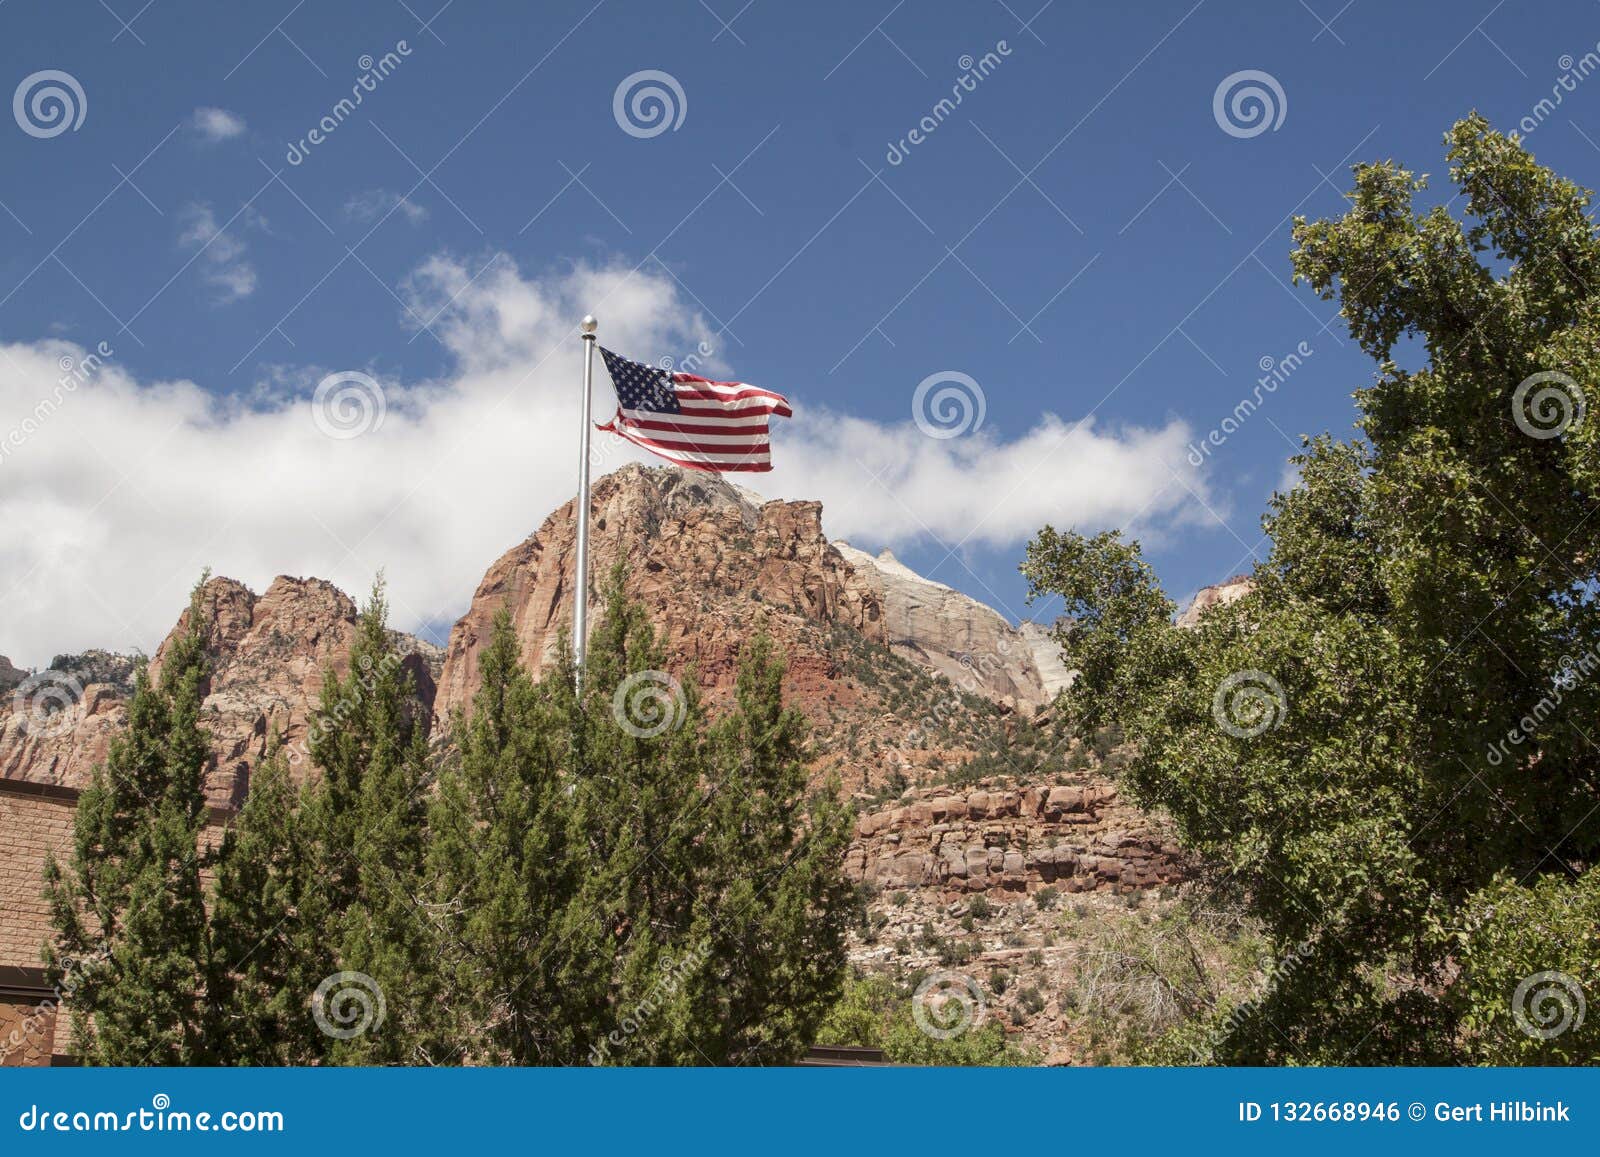 Zion National Park, Utah, United States of America. | Flickr